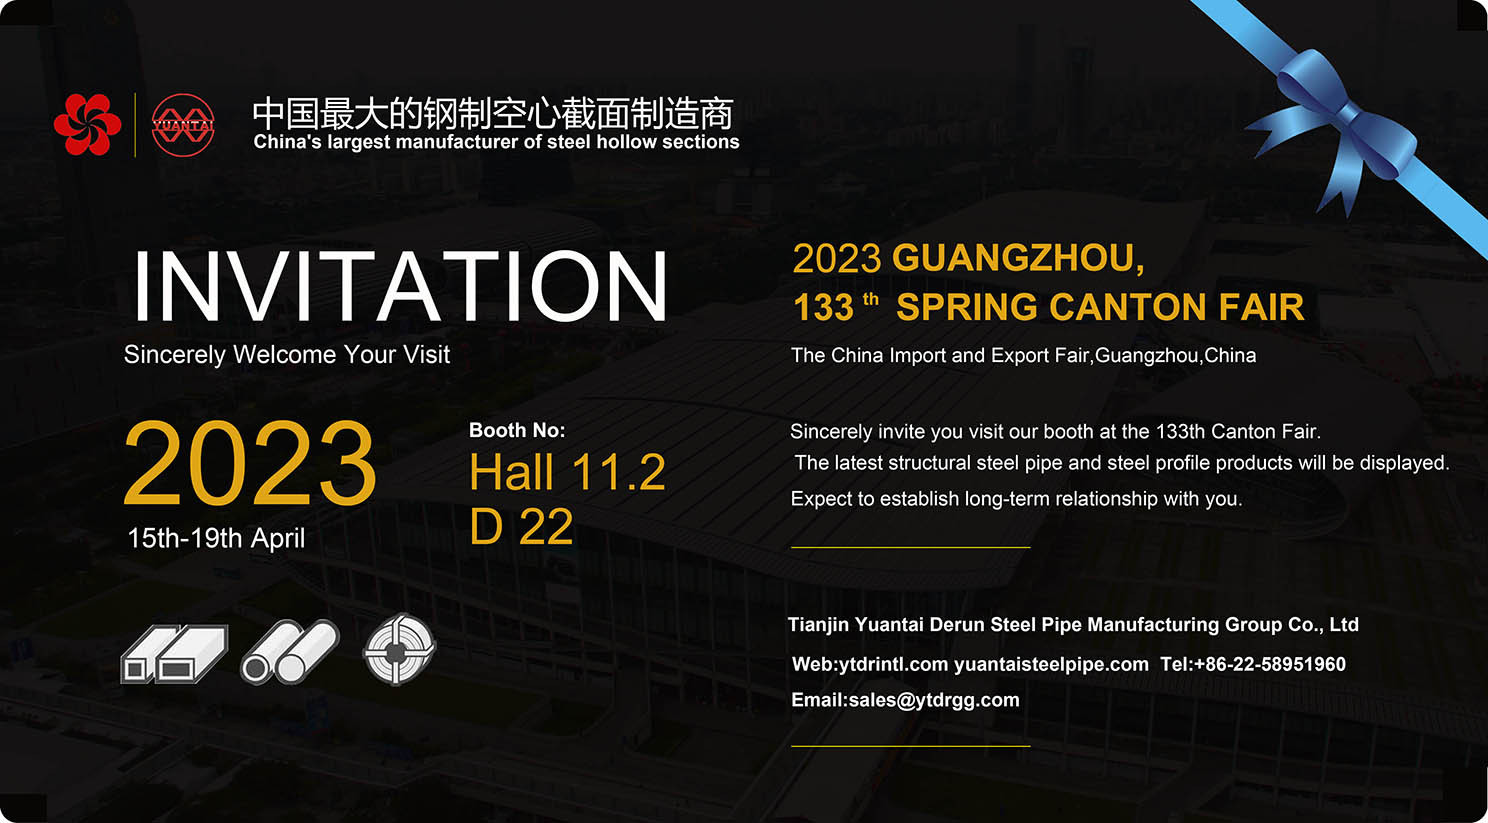 invitation-Tianjin yuantai derun steel pipe group